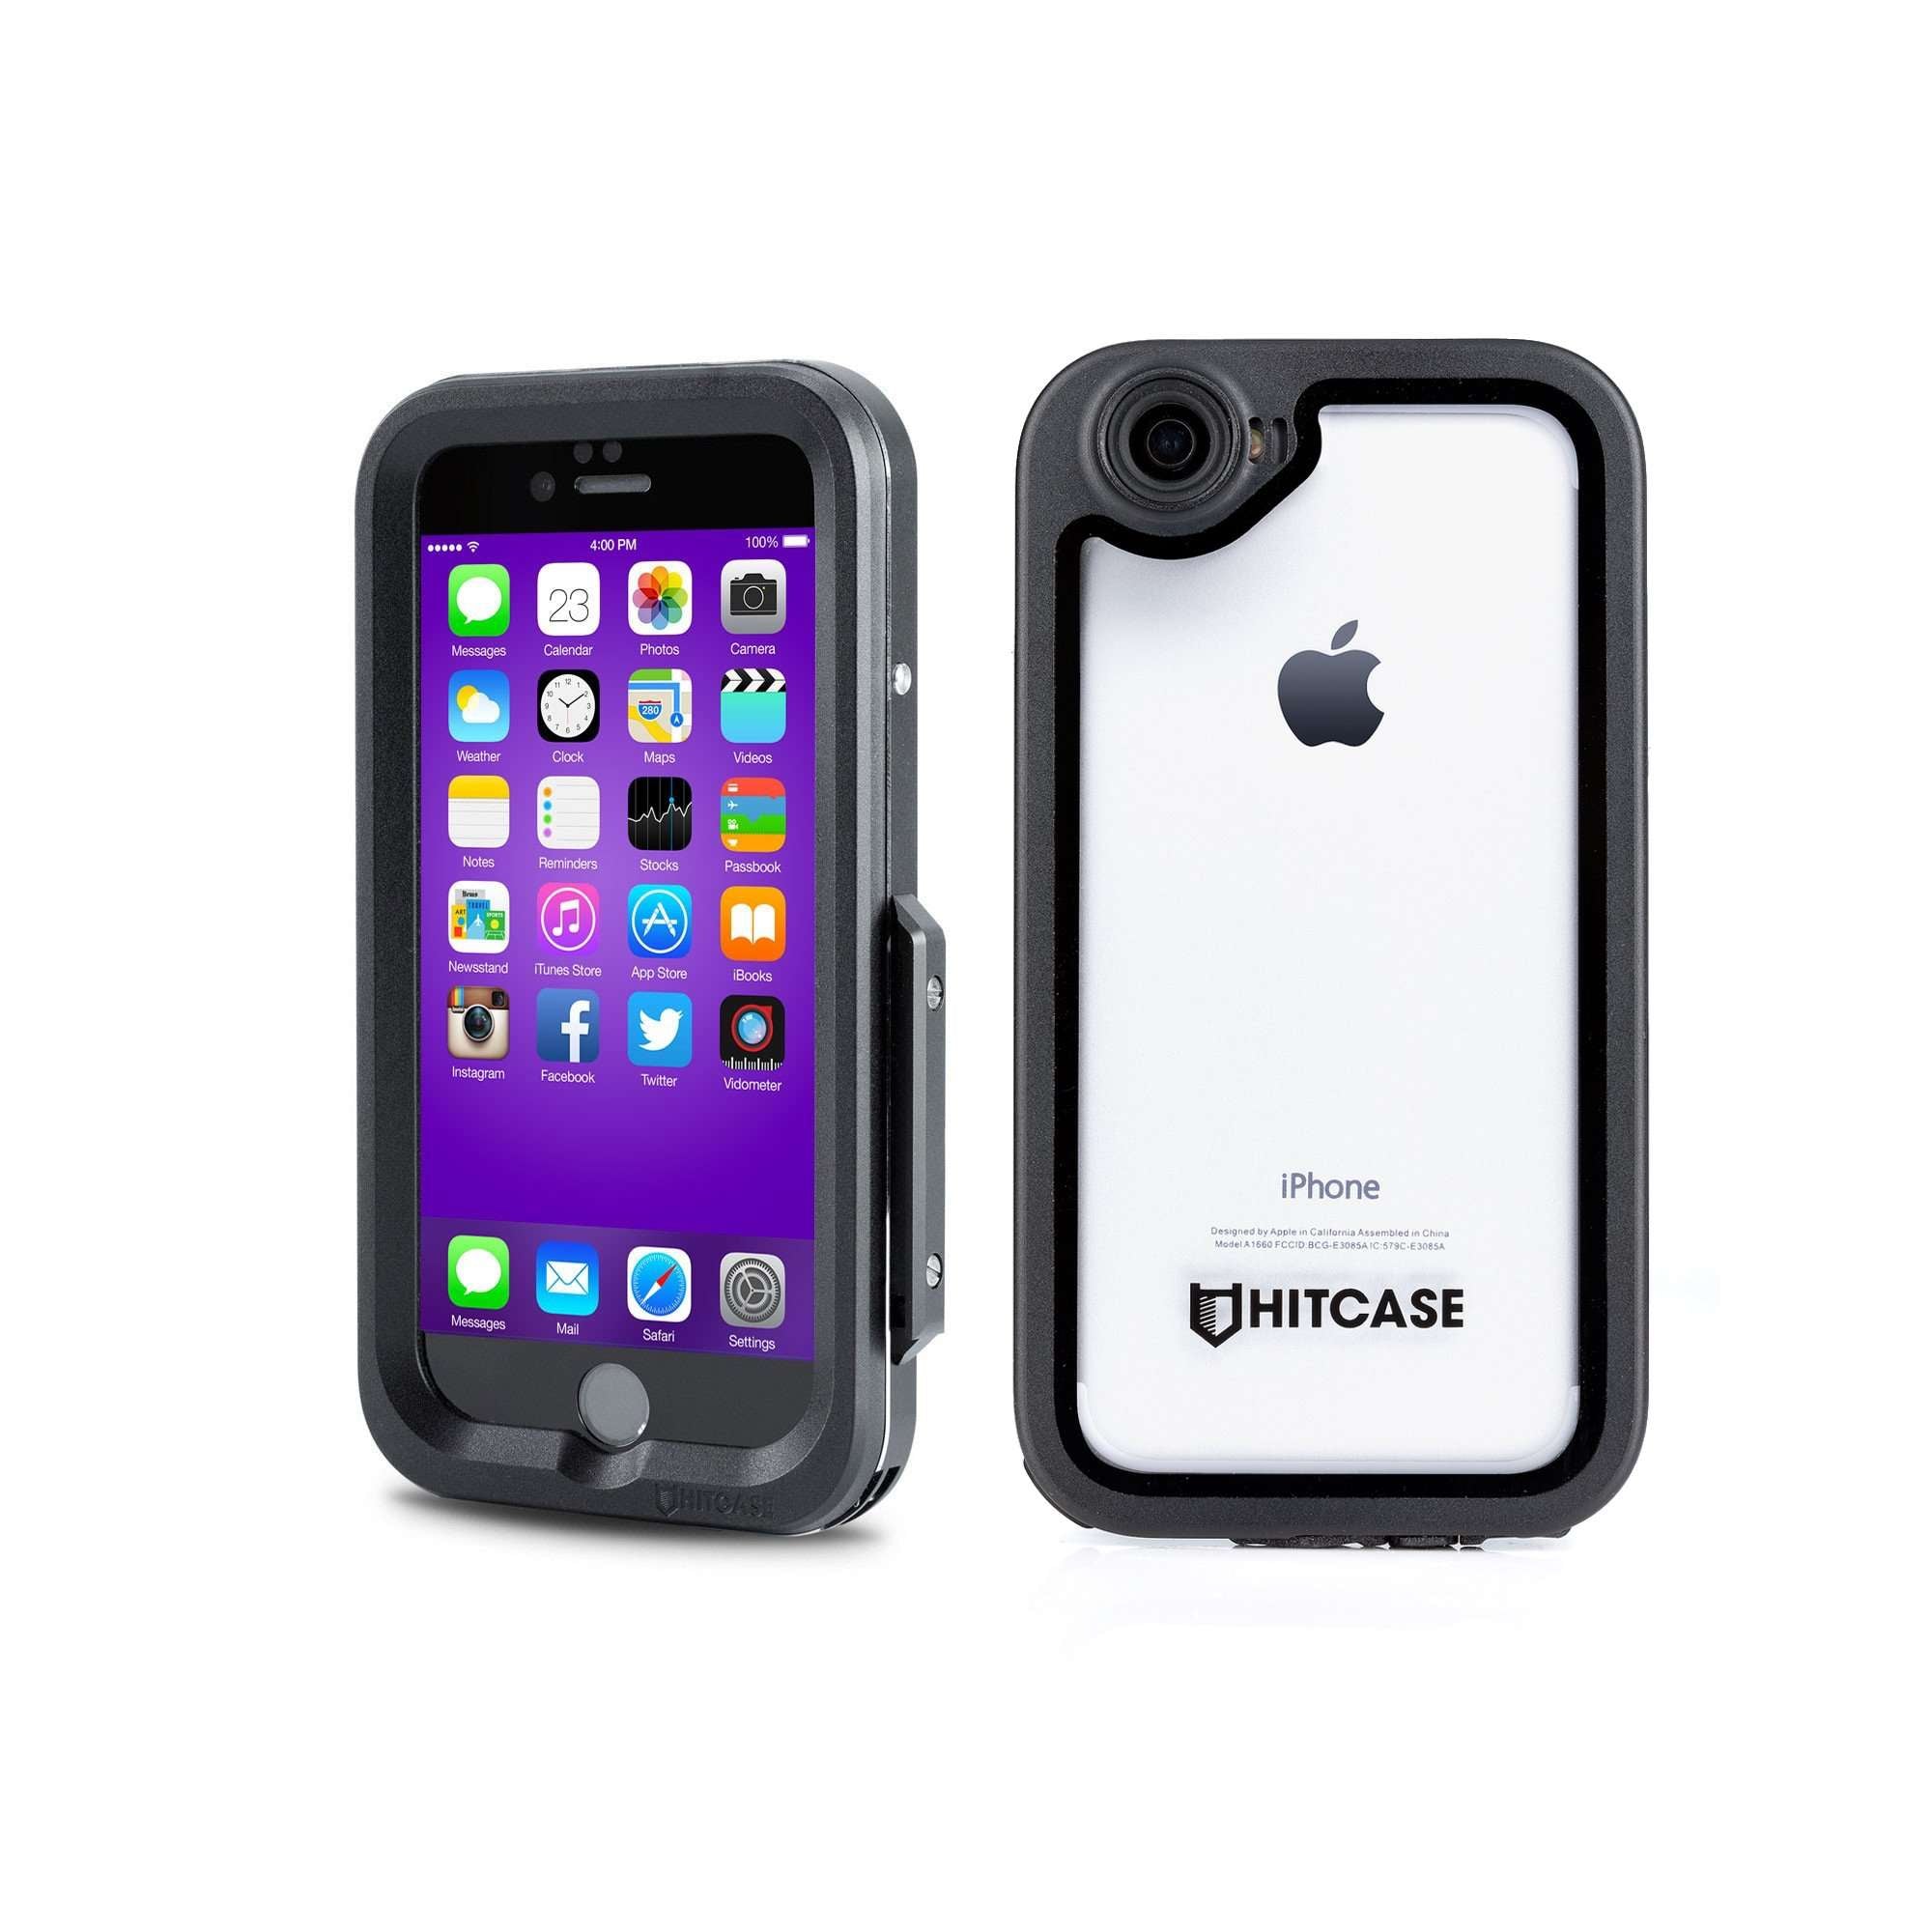 Protective, Waterproof iPhone & 8 Hitcase